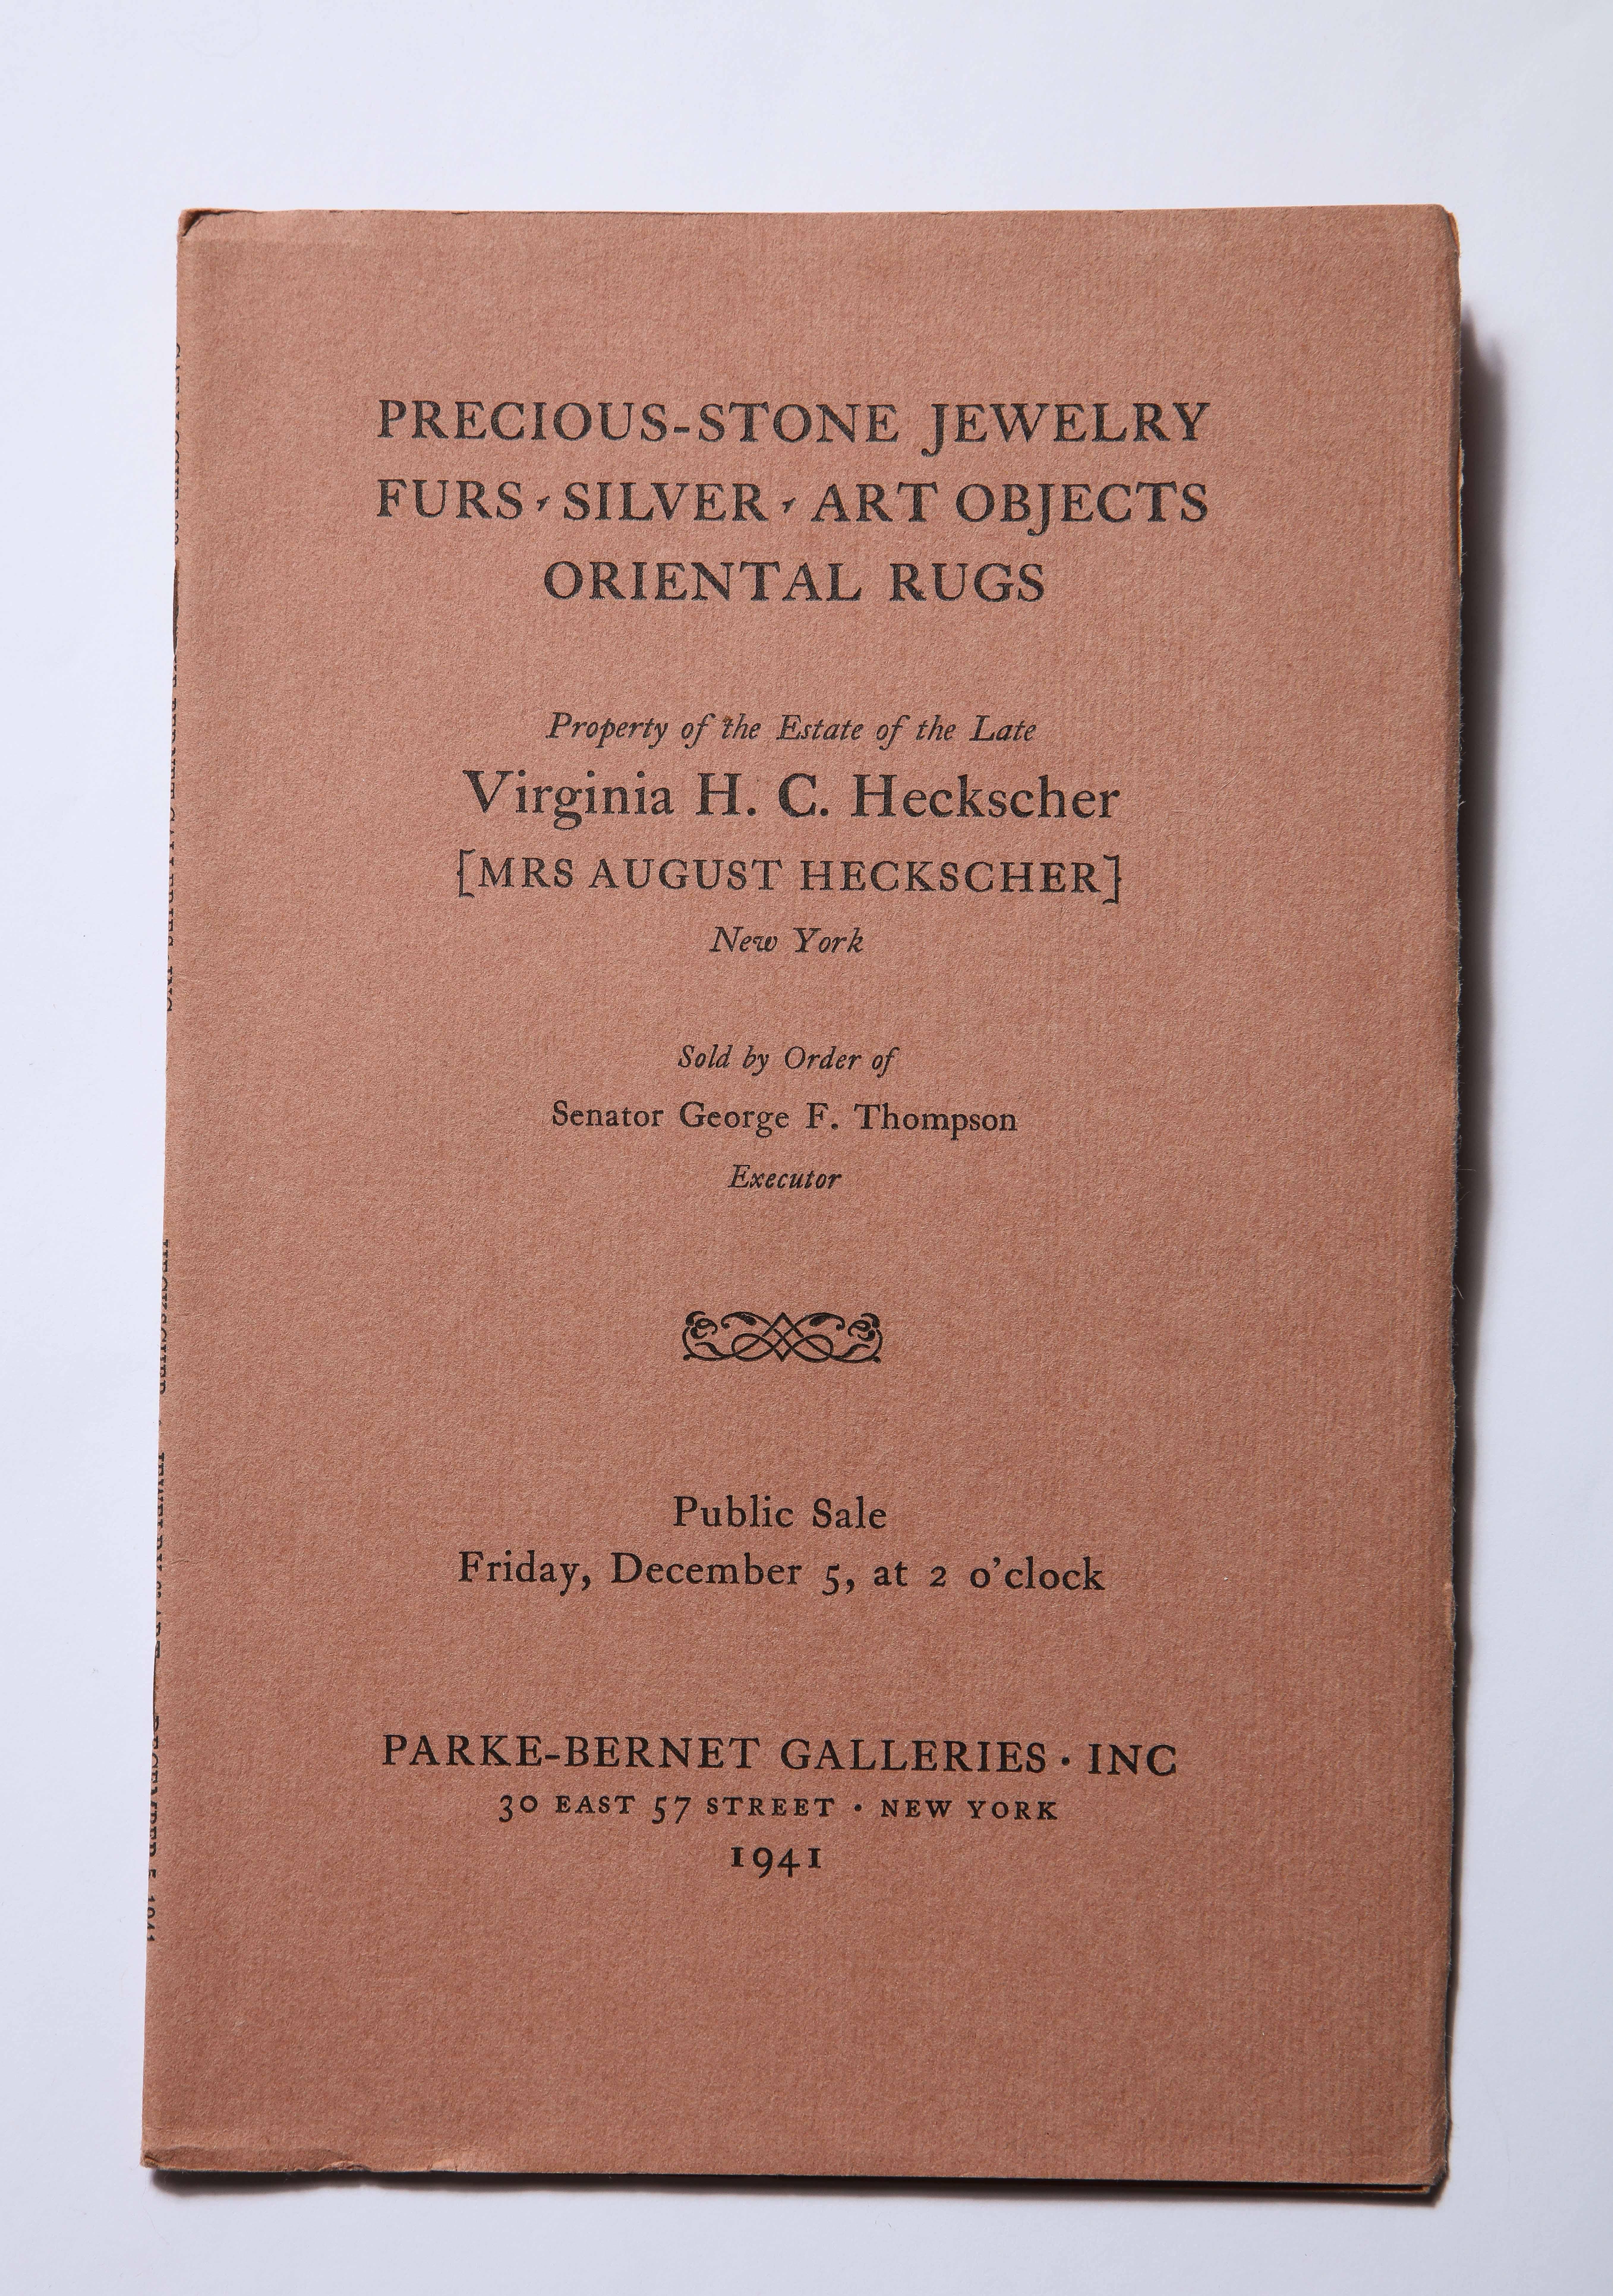 Sammler Vintage Sotheby Important Jewelry Auktionskataloge Cartier Art Deco im Angebot 3